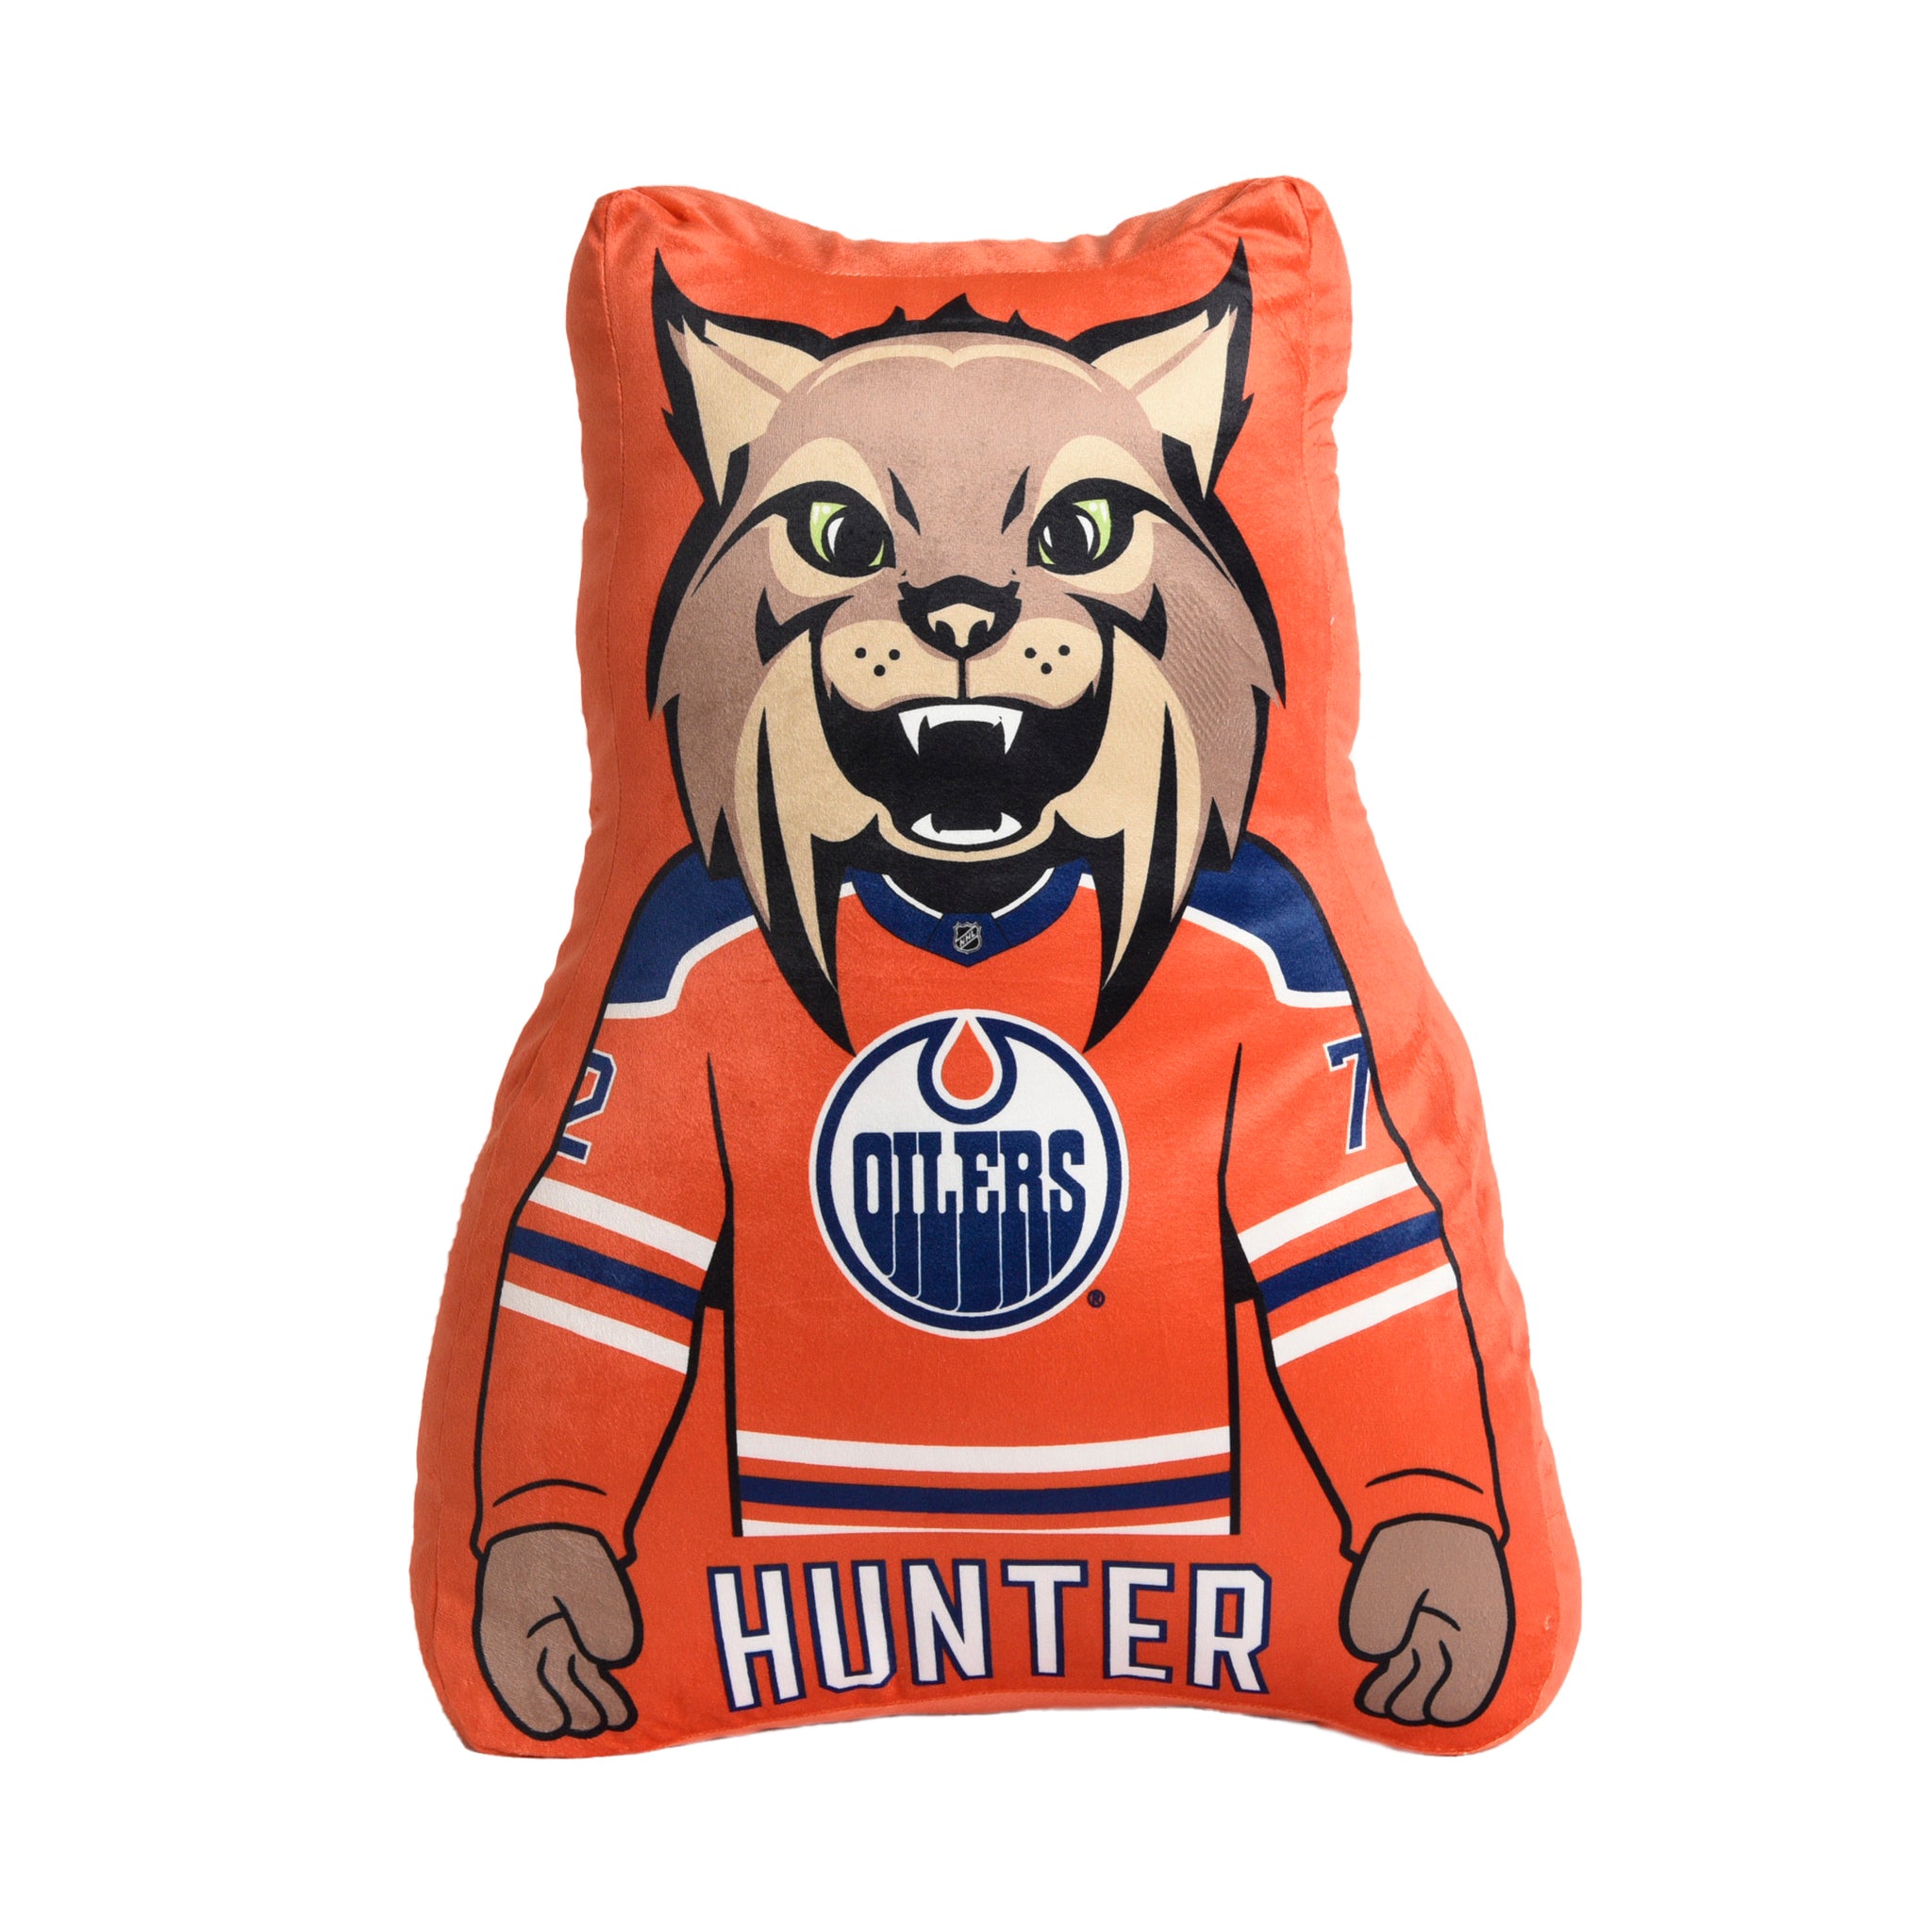 NHL Edmonton Oilers Mascot Pillow, 20